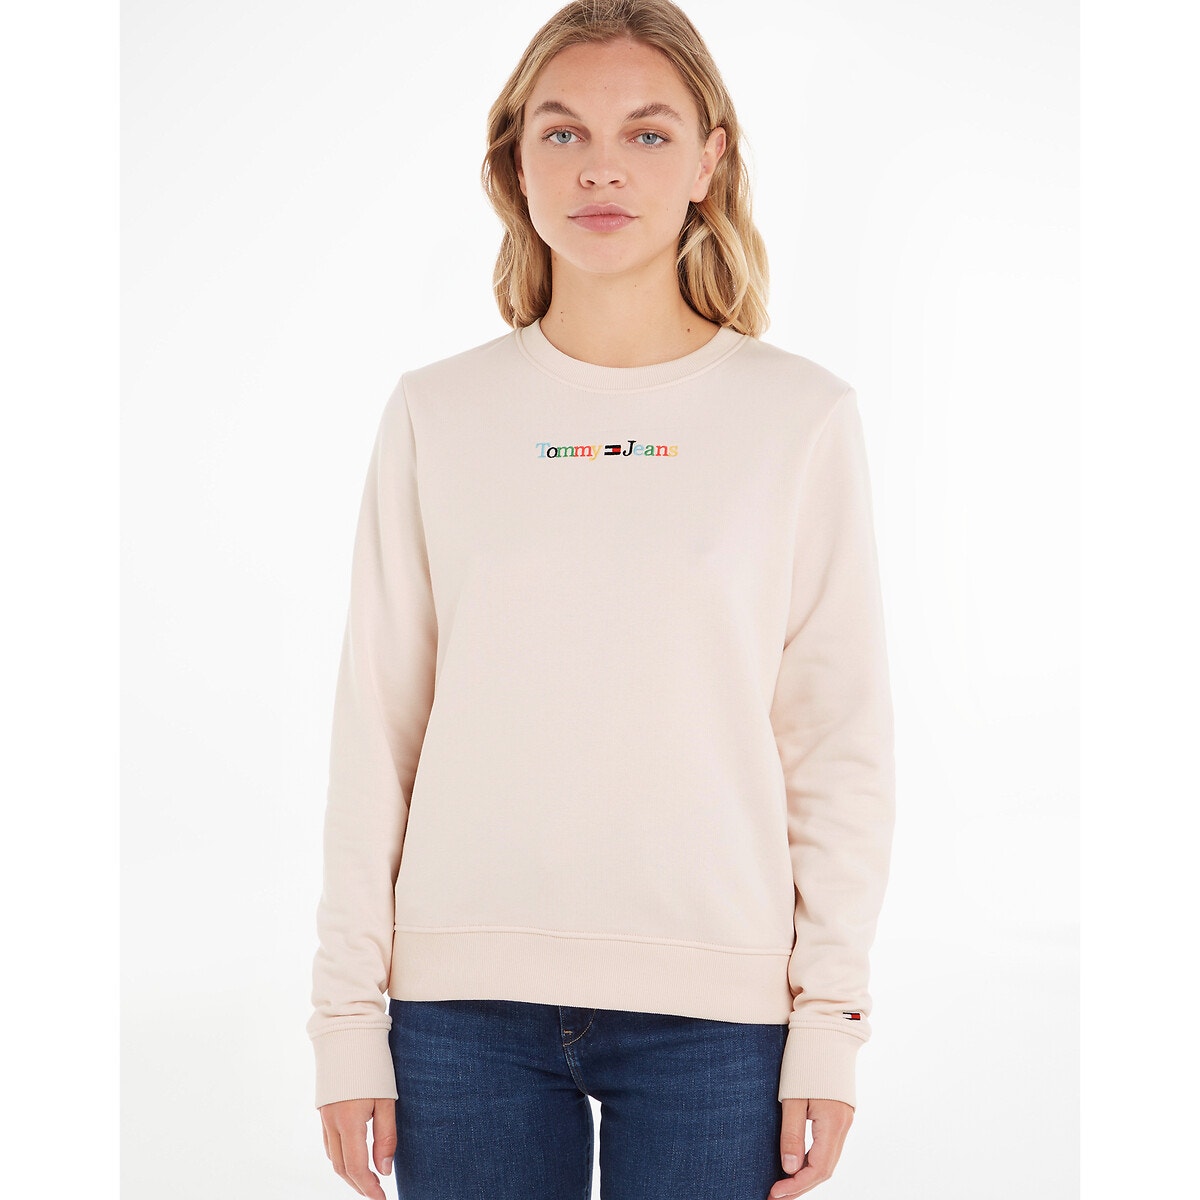 t-shirt Tamagotchi - rose clair - Undiz